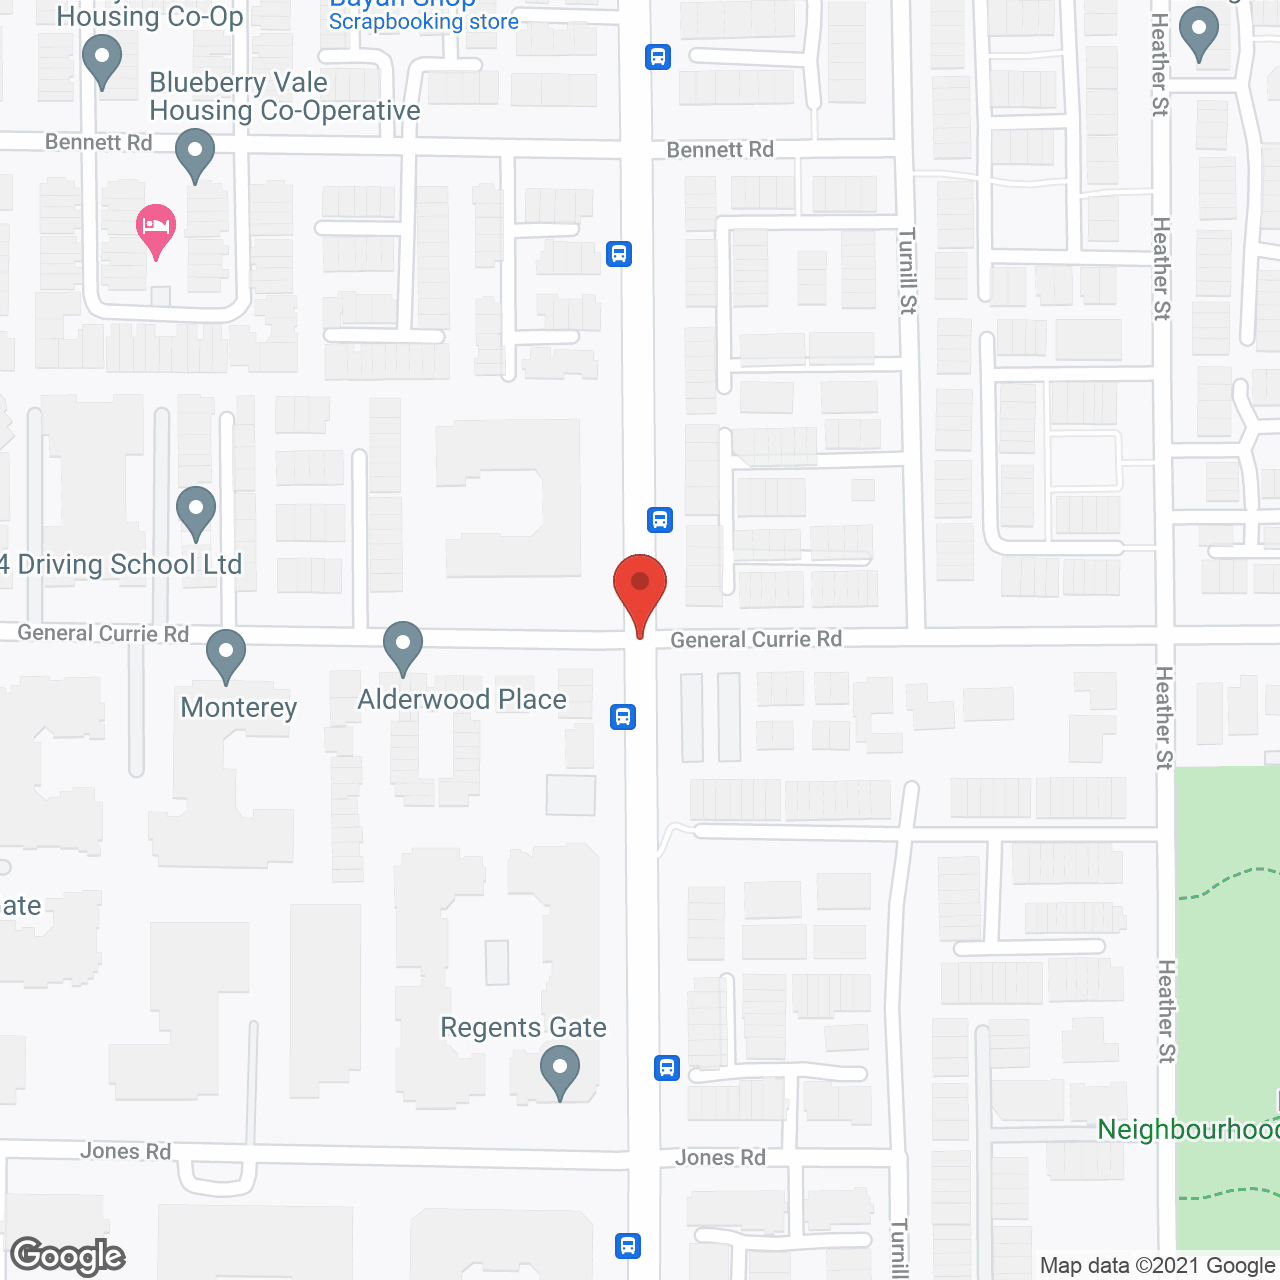 Sundune Housing Co-Op in google map